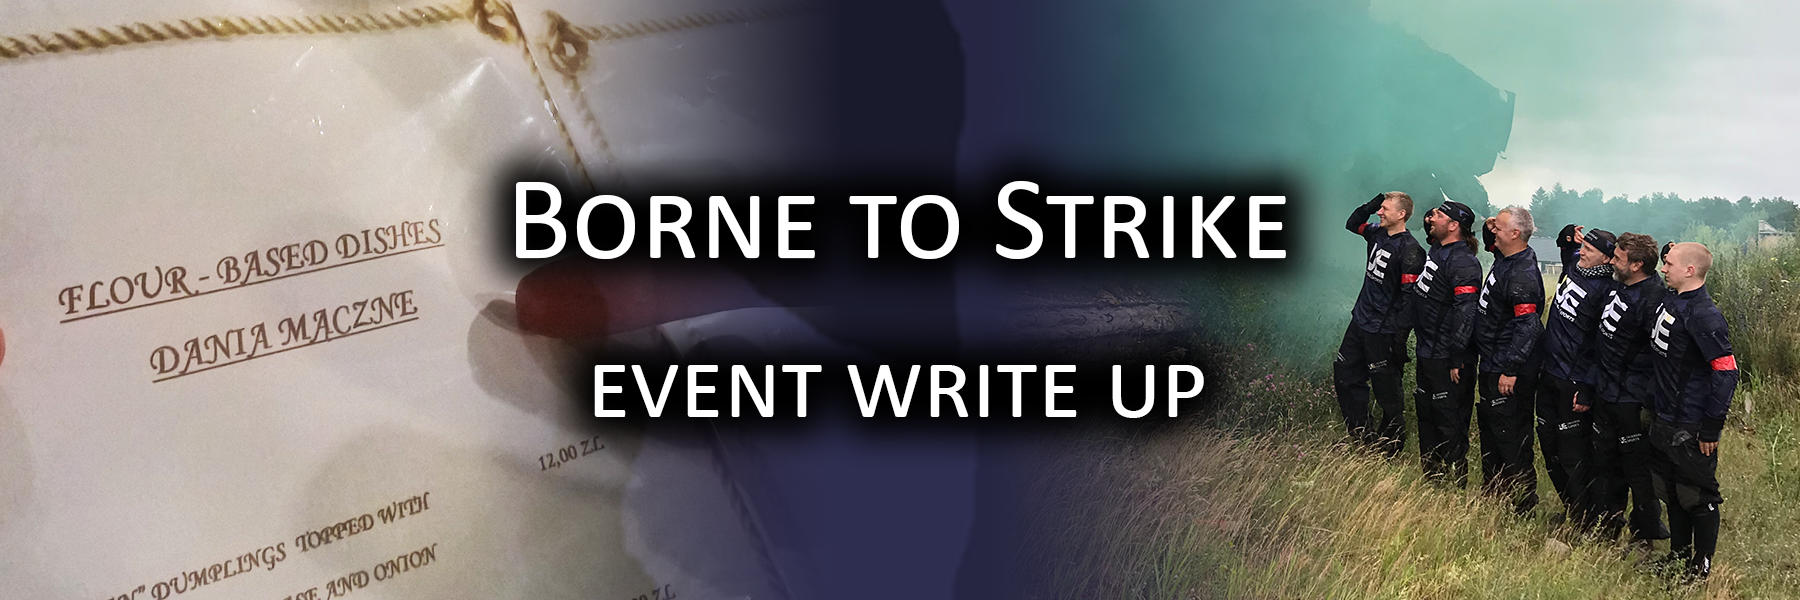 Borne To Strike Event Writeup